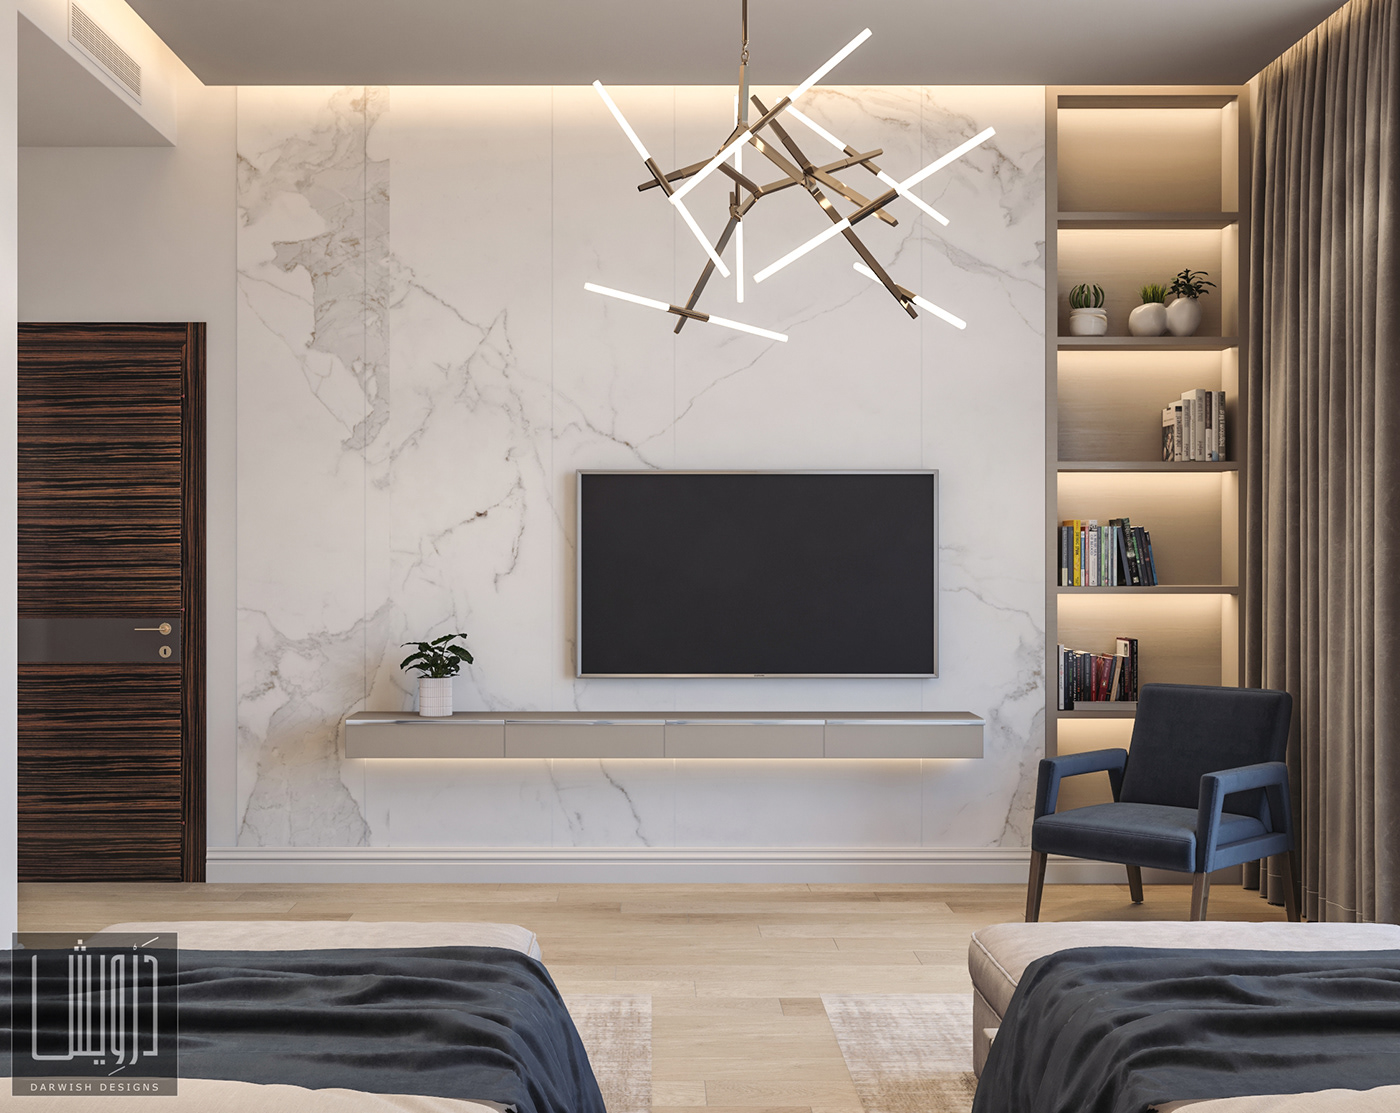 architecture Interior bedroom twin modern Render design